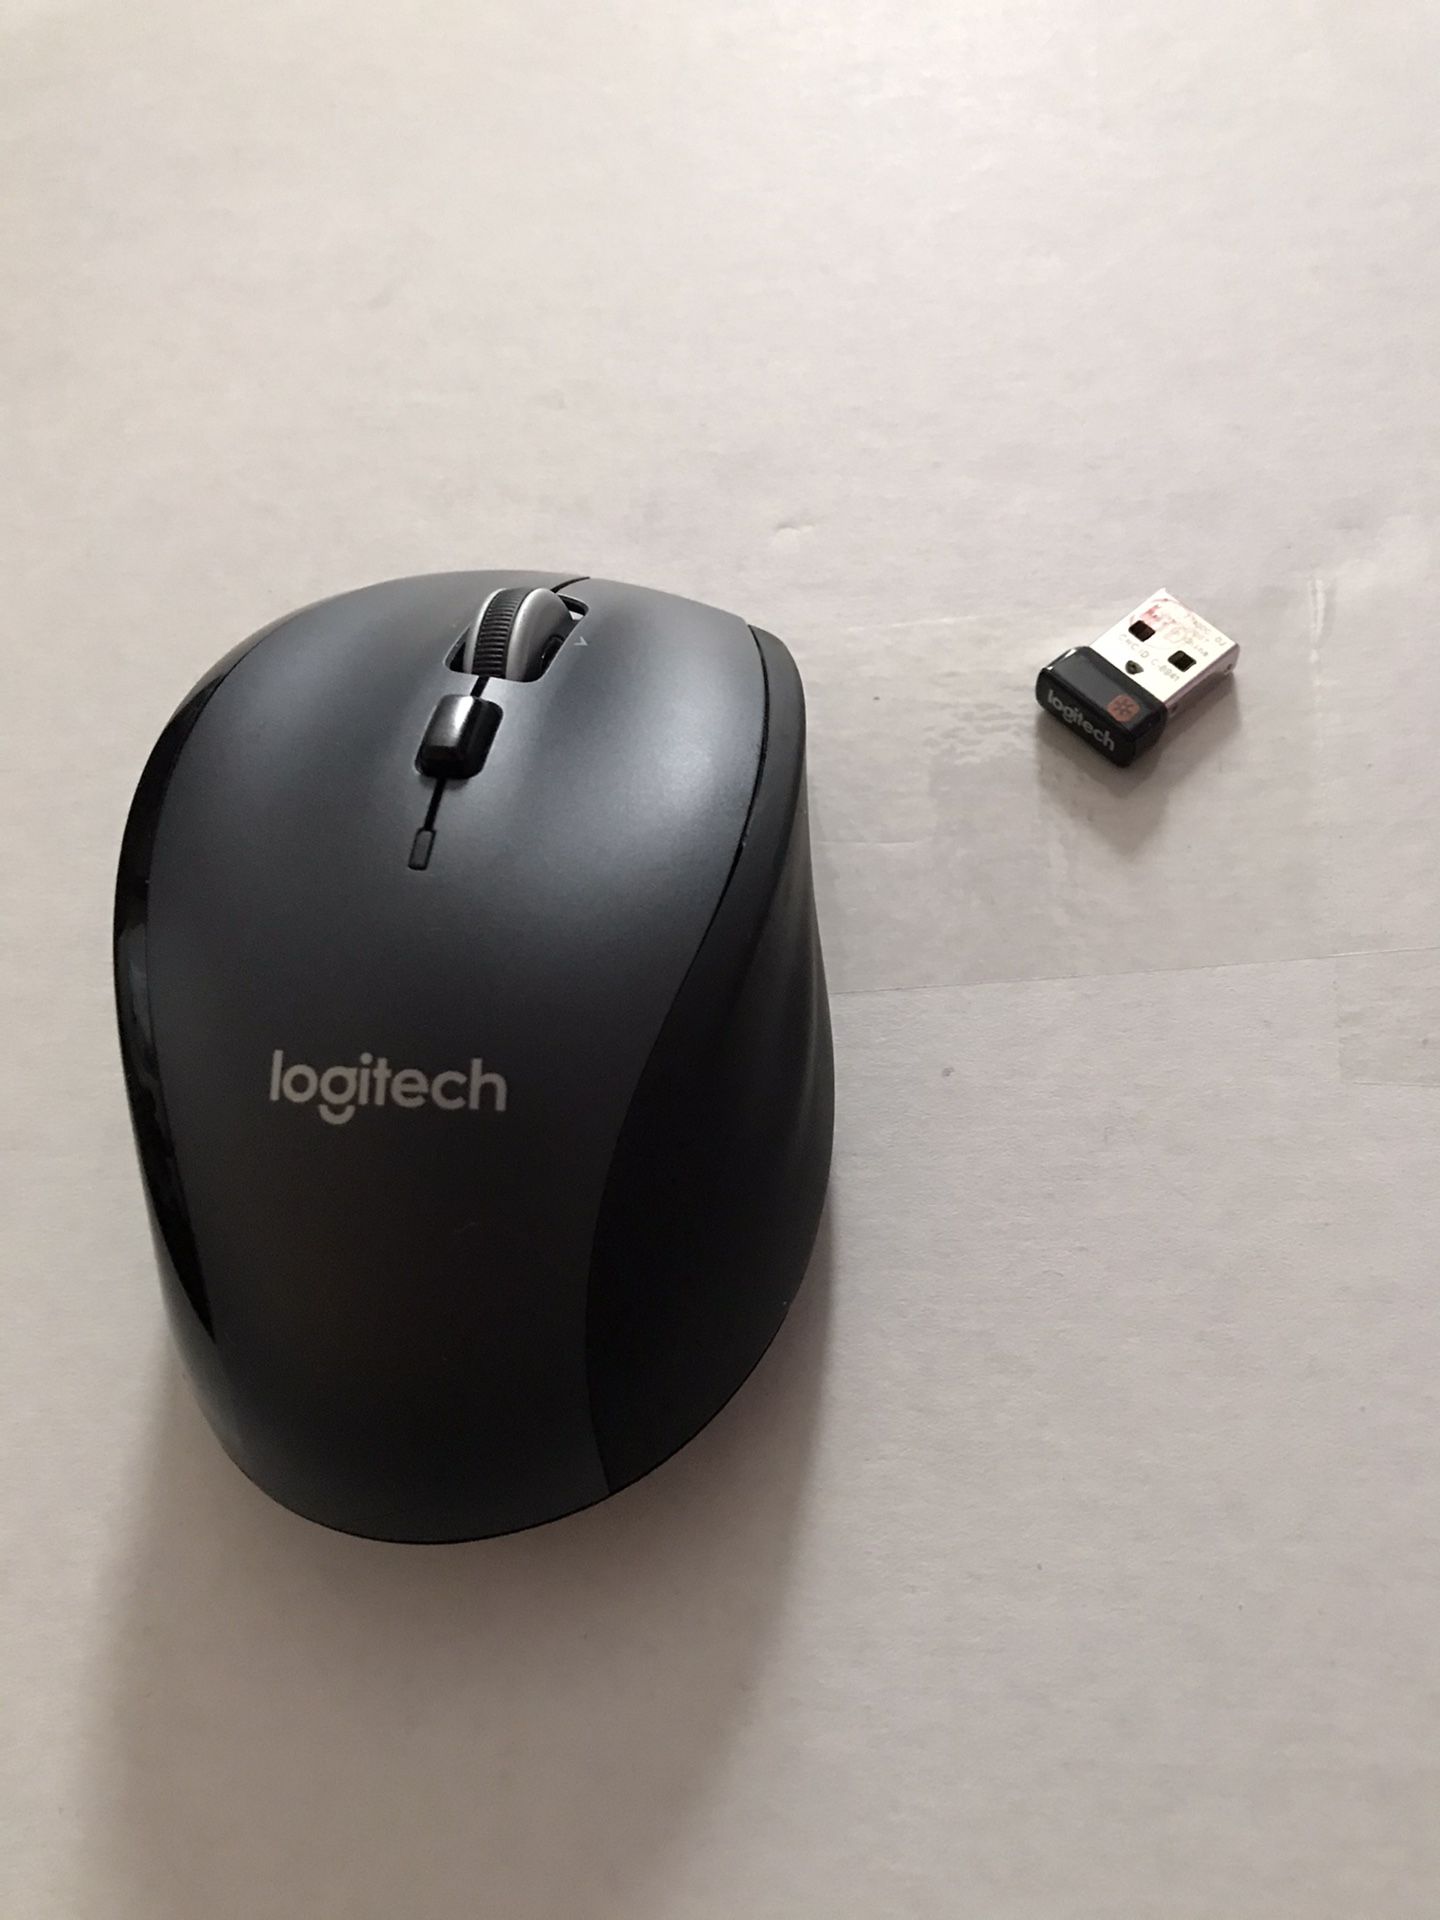 Logitech wireless mouse super comfortable